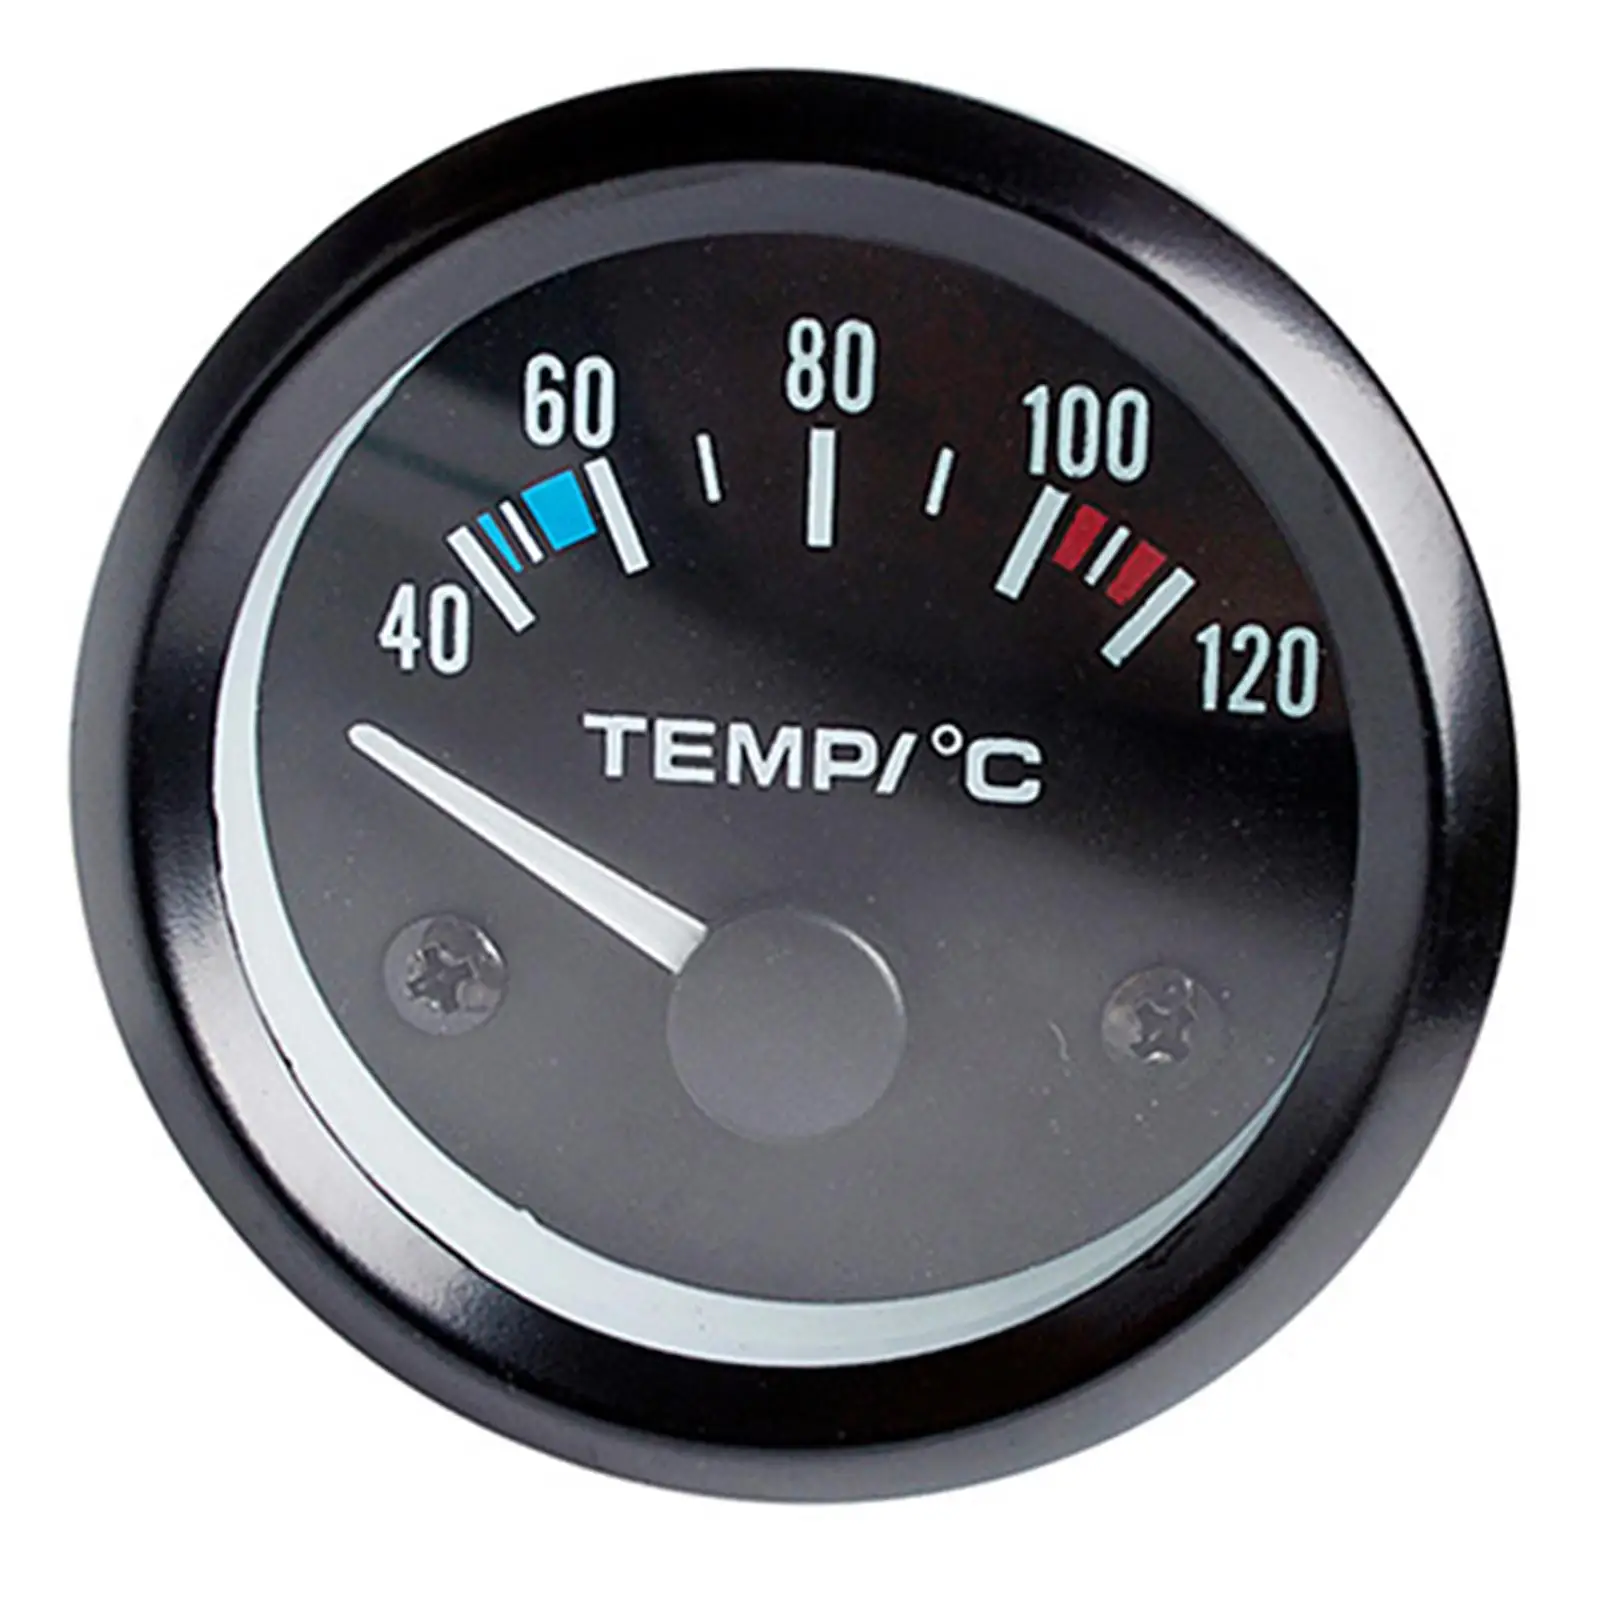 Water Temperature Gauge Premium High Performance Temperature Meter Water Temp Gauge for Automotive Auto Truck Car Vehicle